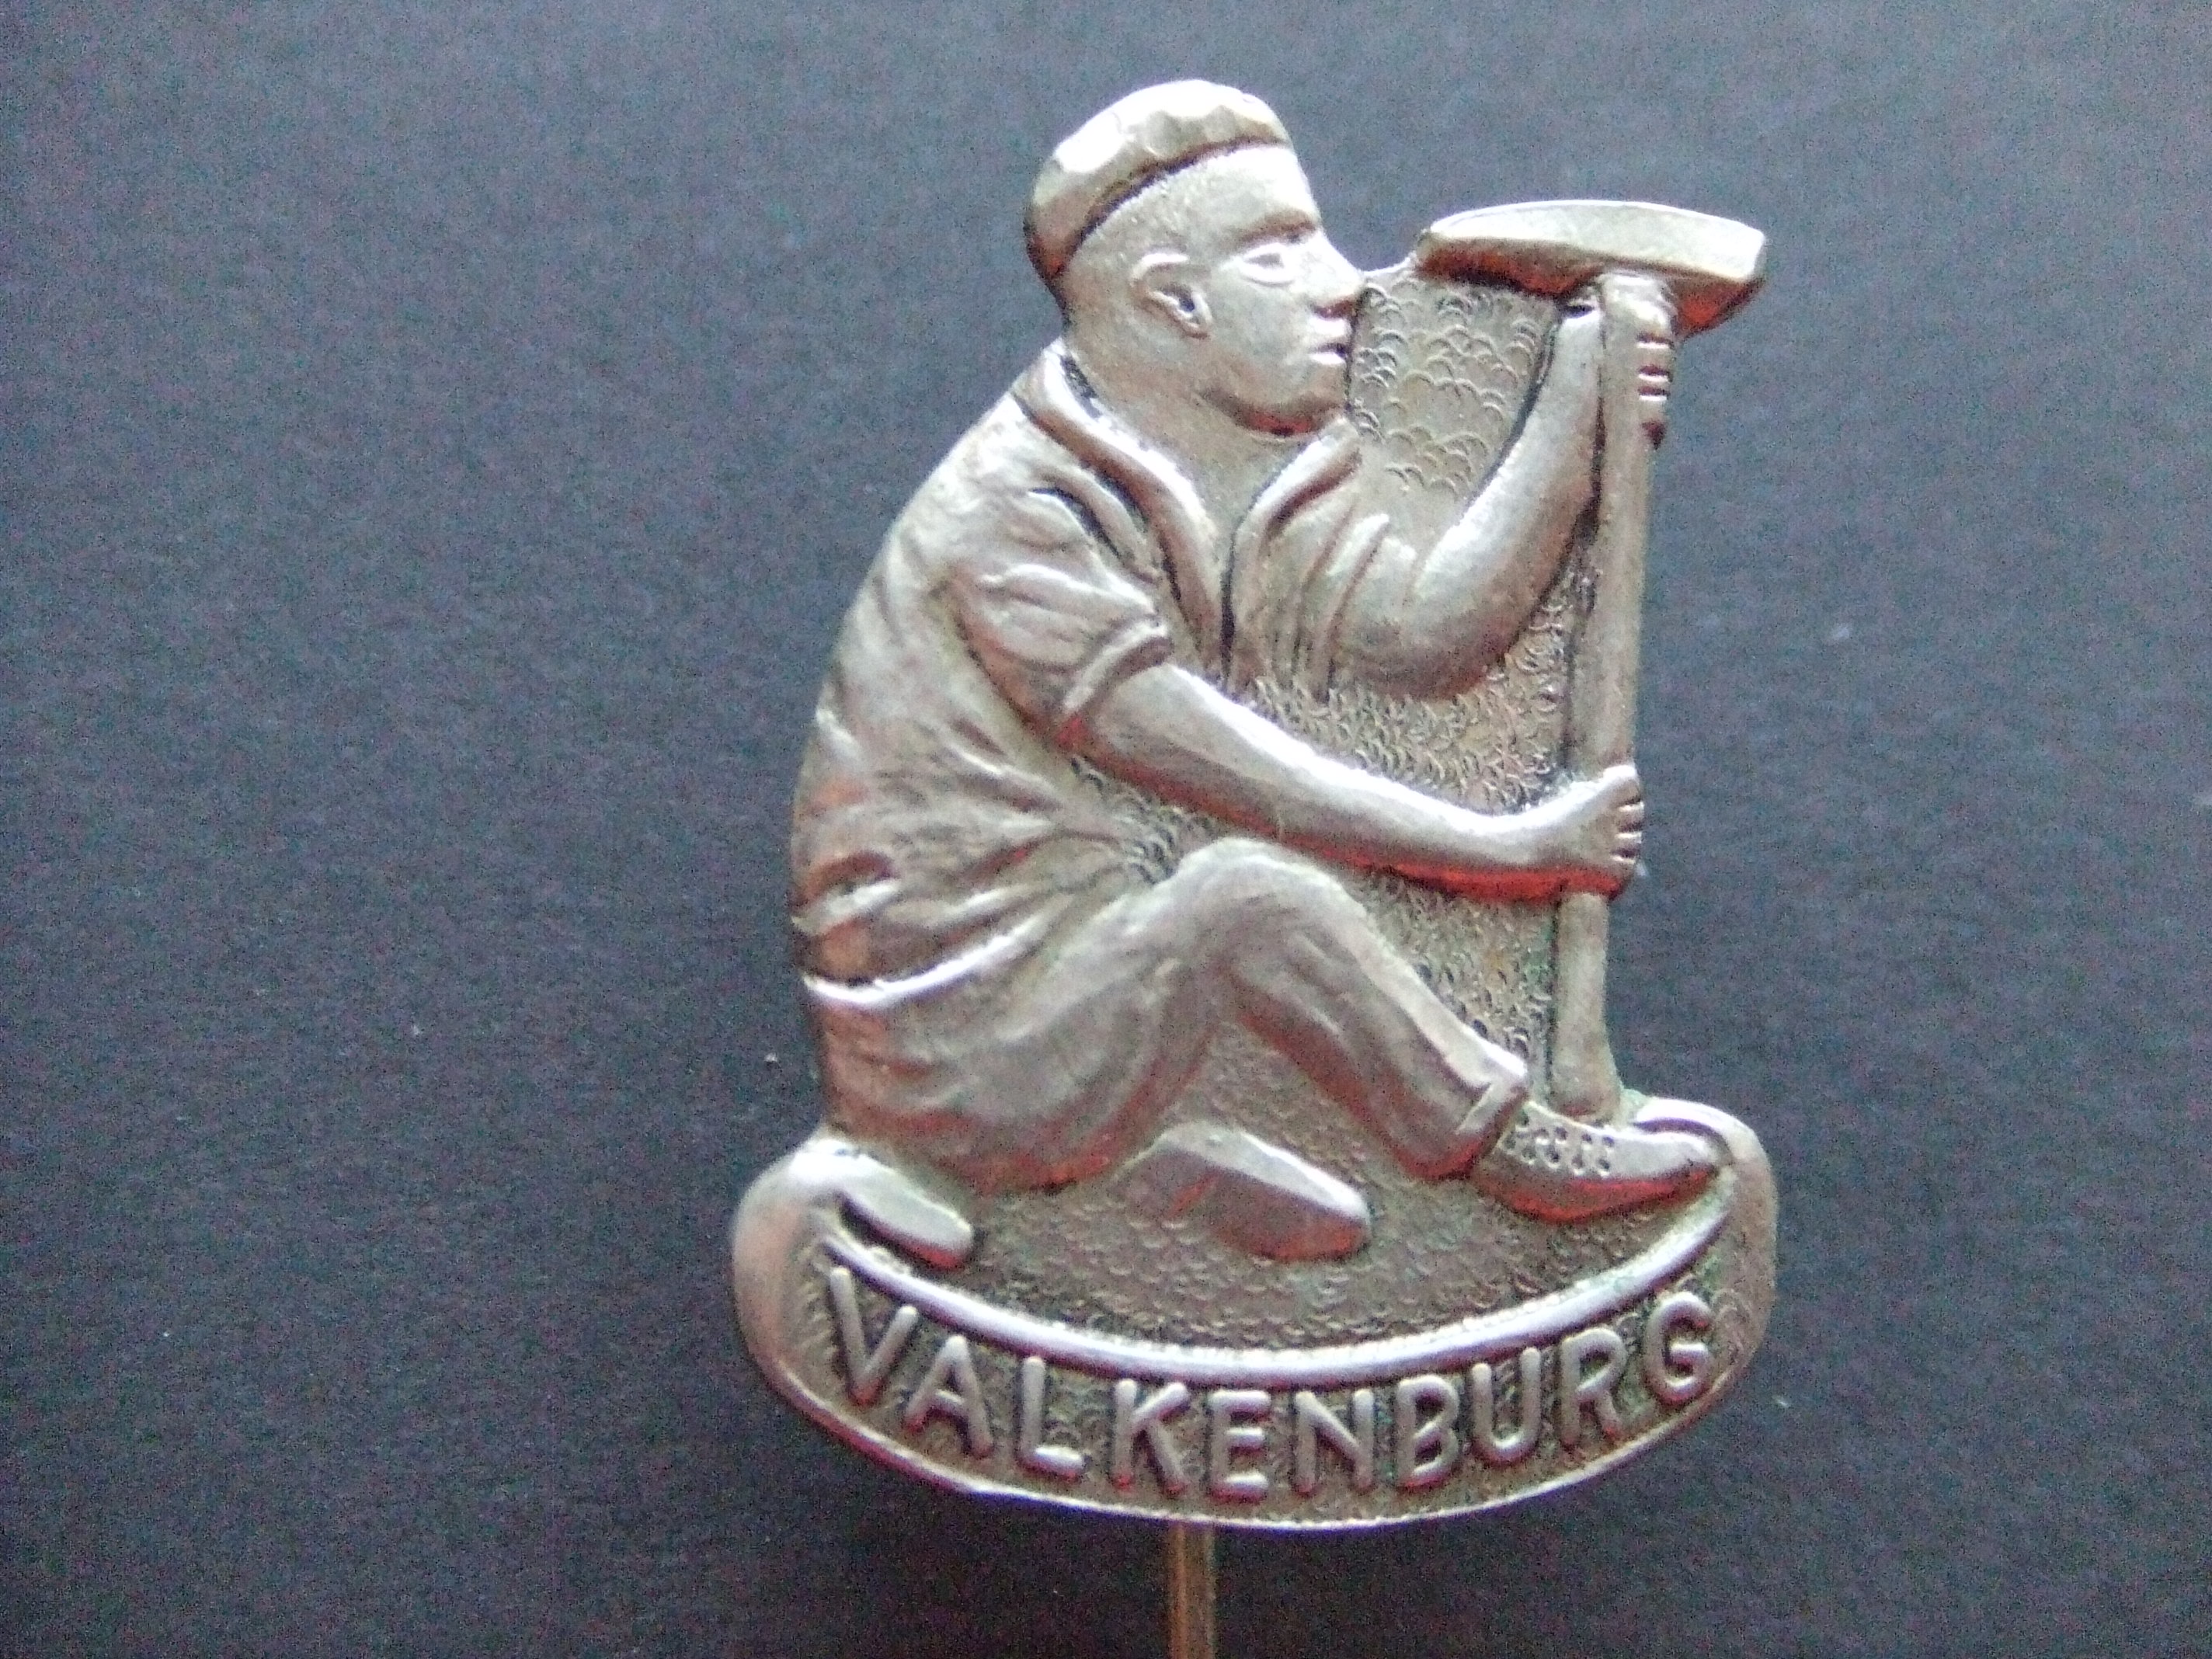 Valkenburg symbool Limburgse mijnen pikhouweel